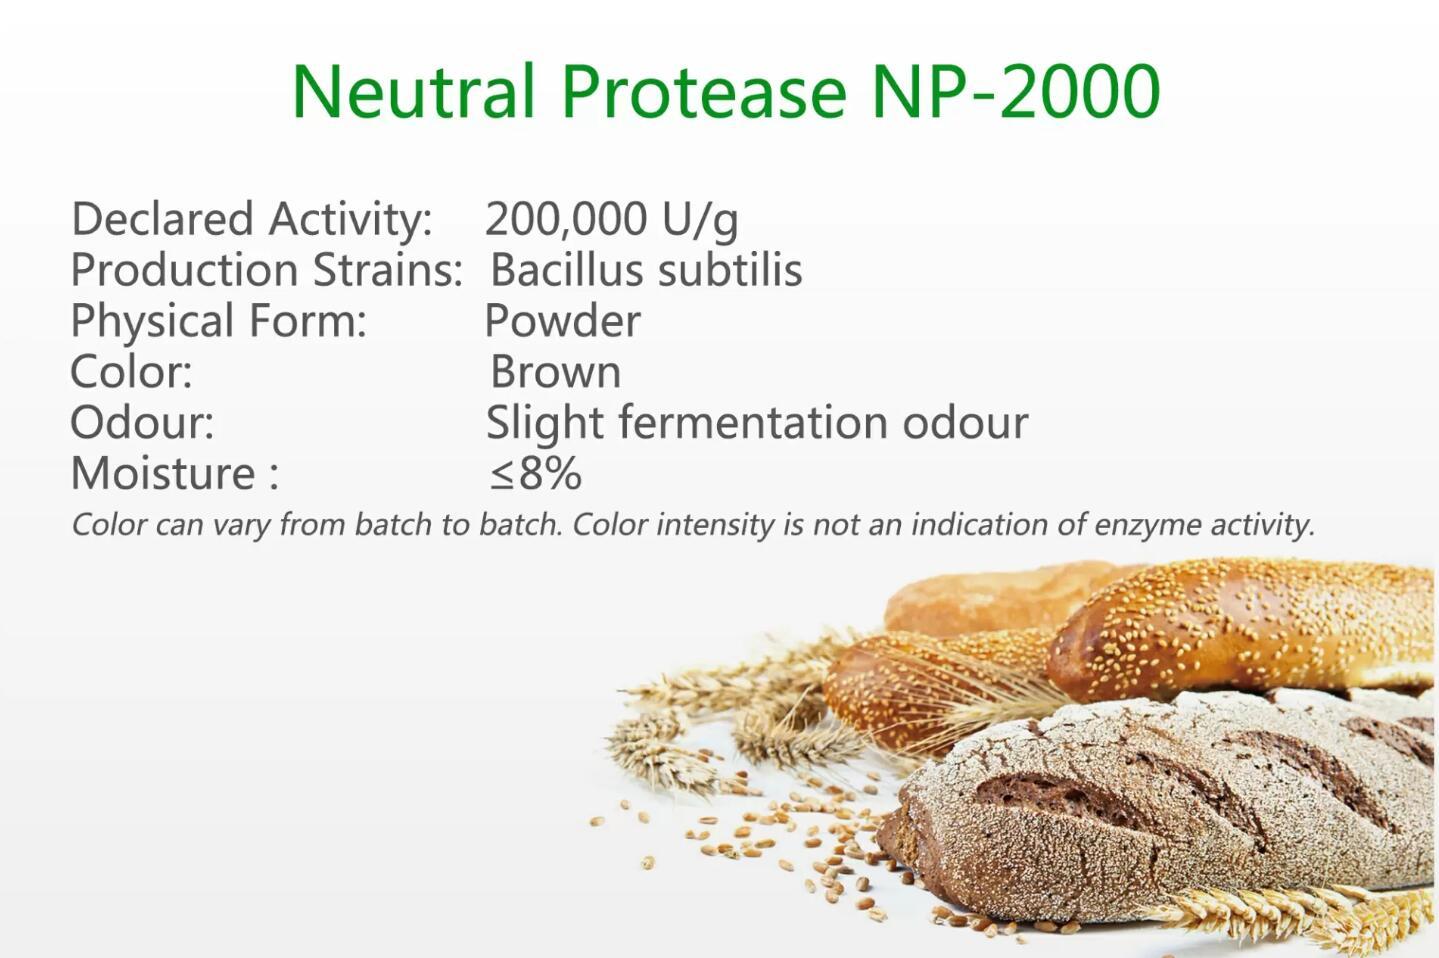 Neutral Protease NP-2000